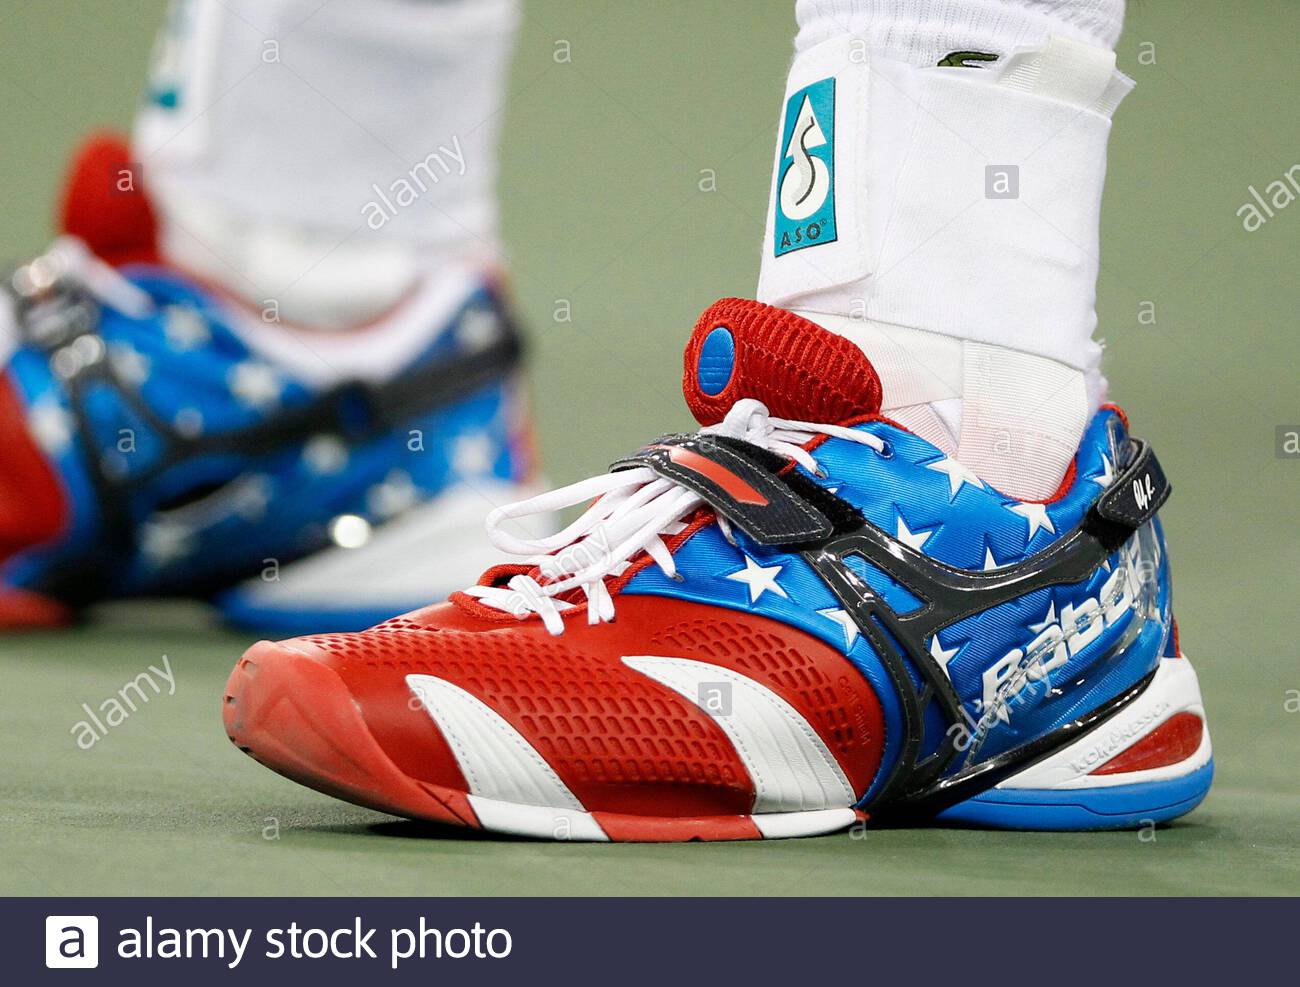 le scarpe da tennis bianche e blu